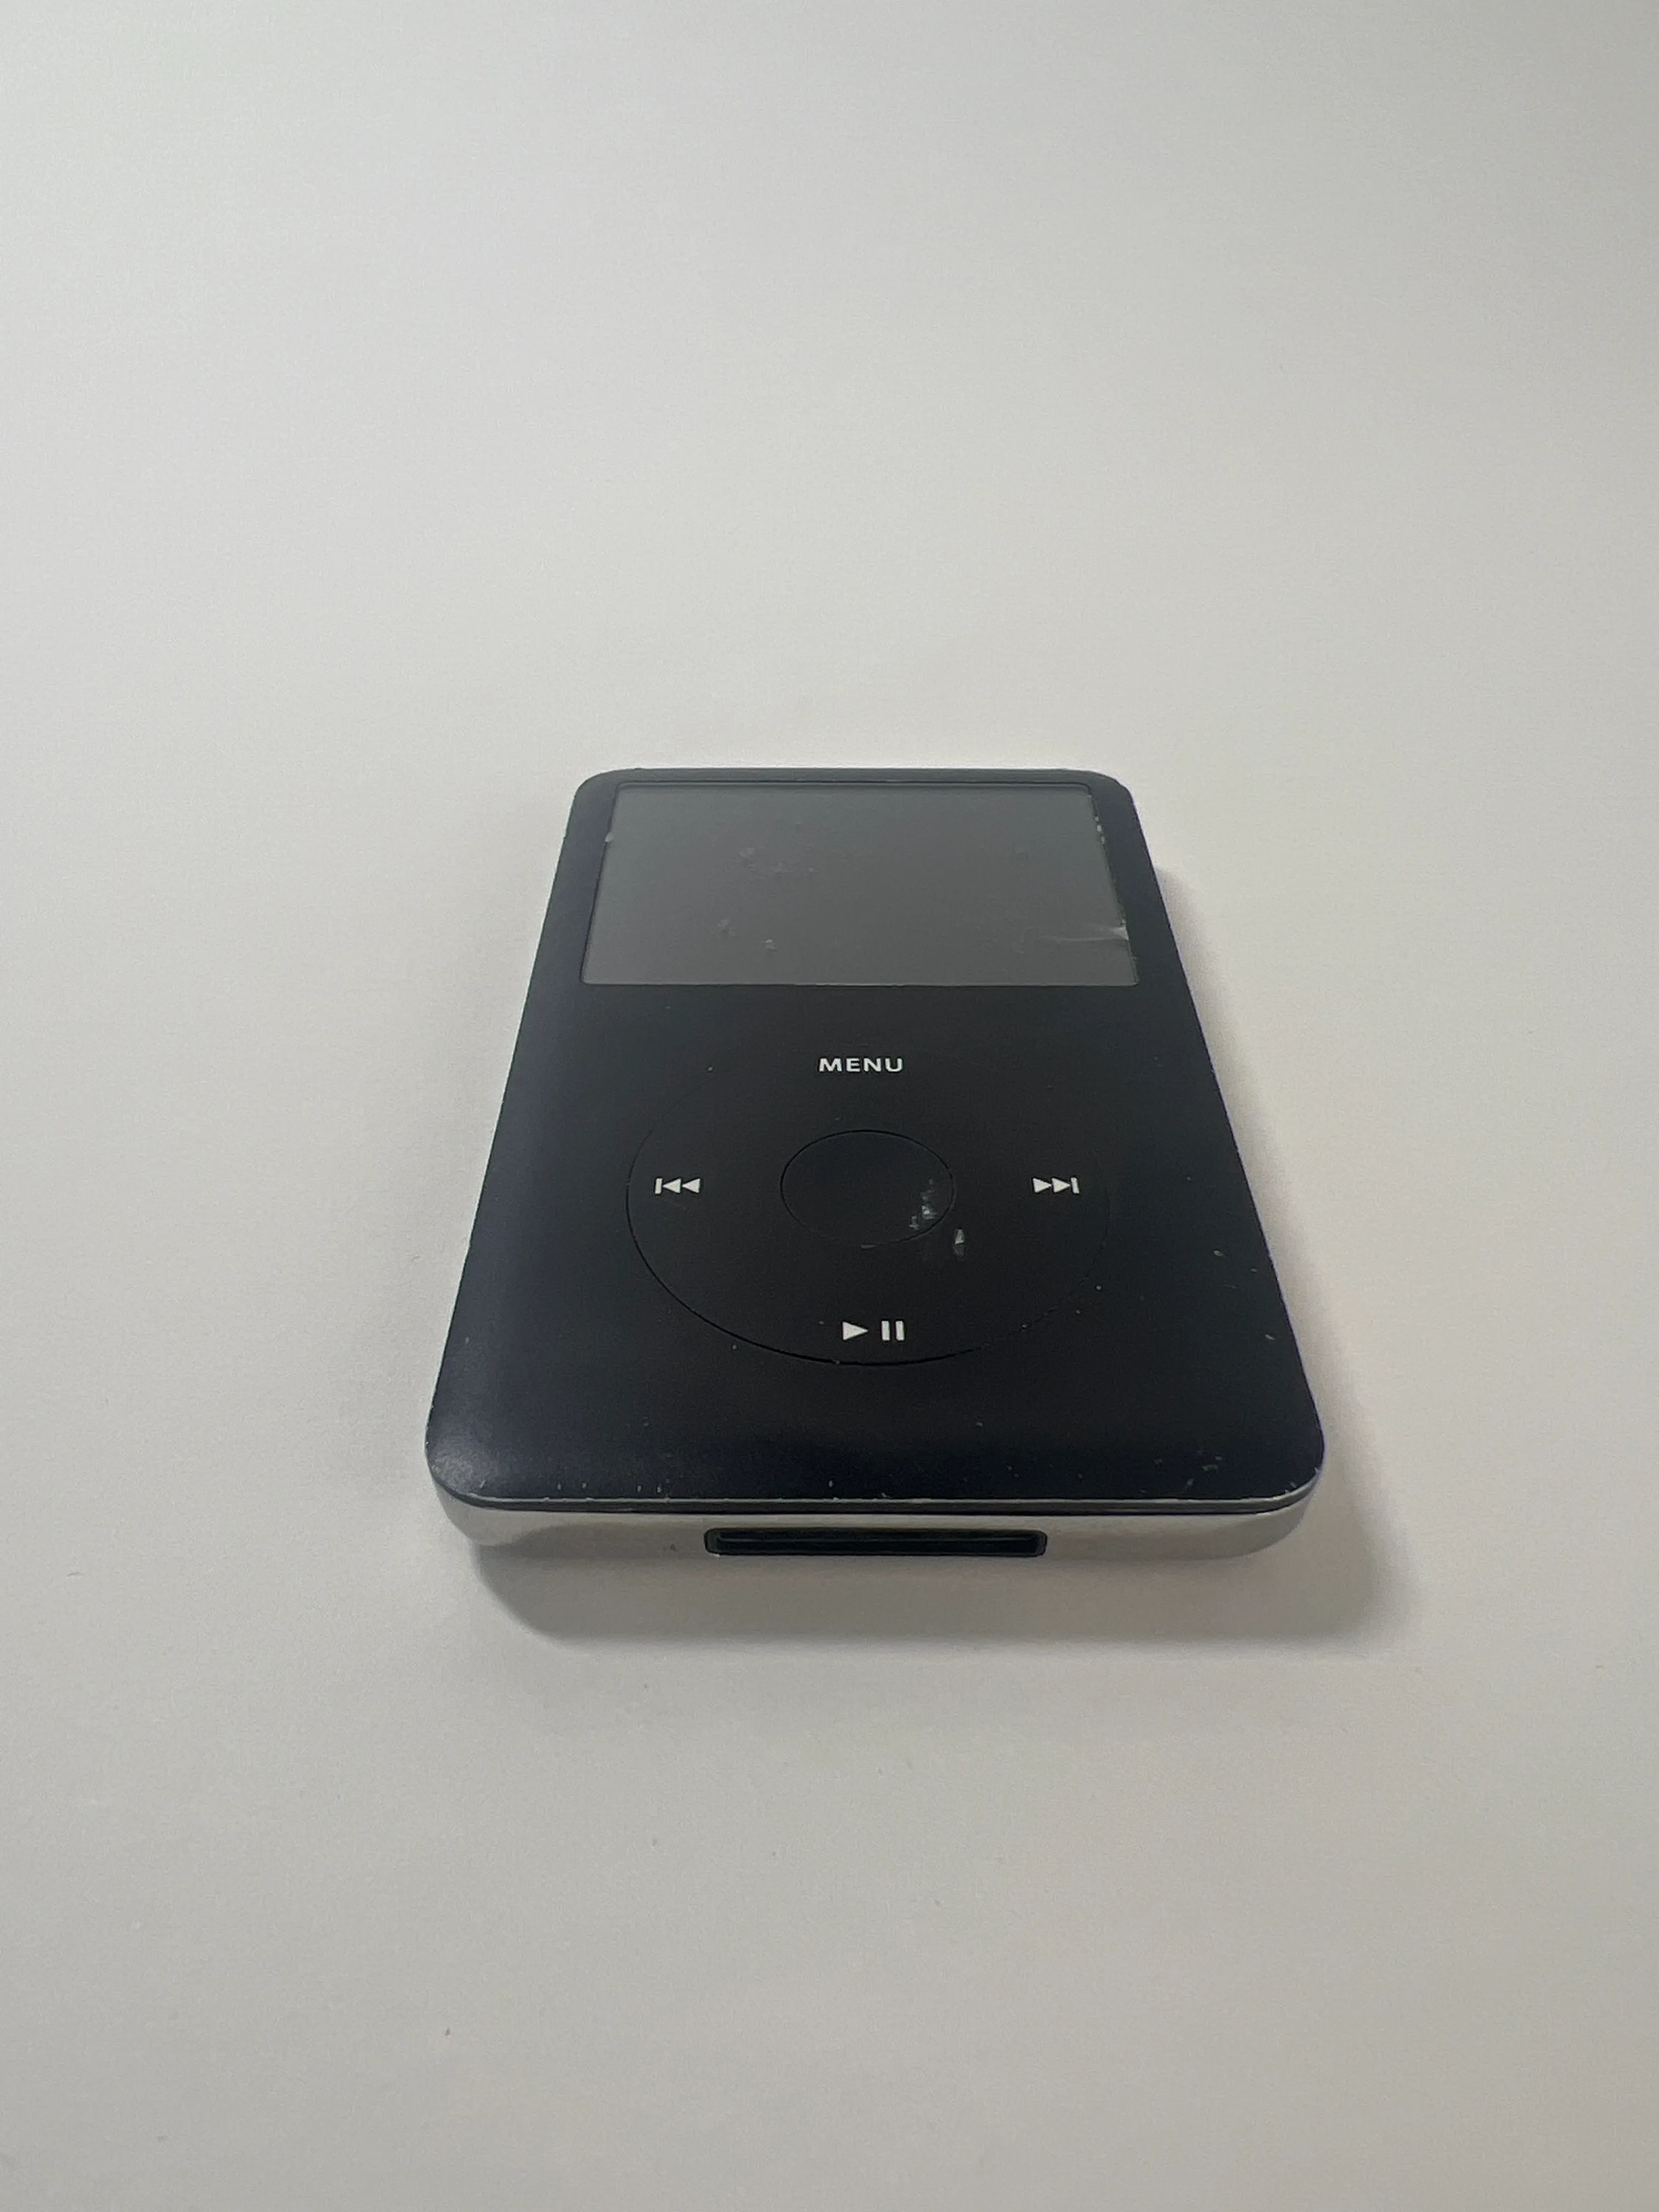 Apple iPod (5th Generation) media